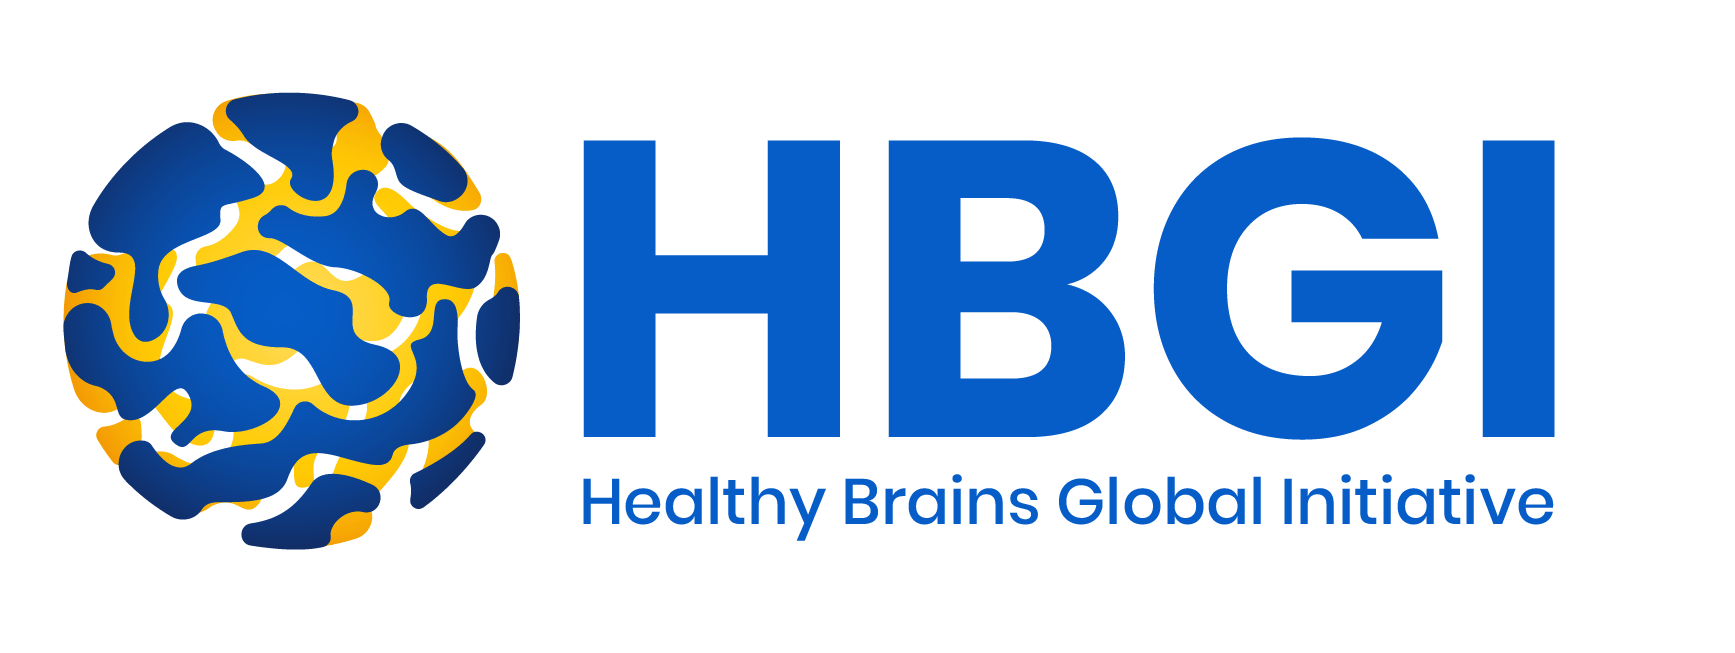 Healthy Brains Global Initiative Logo